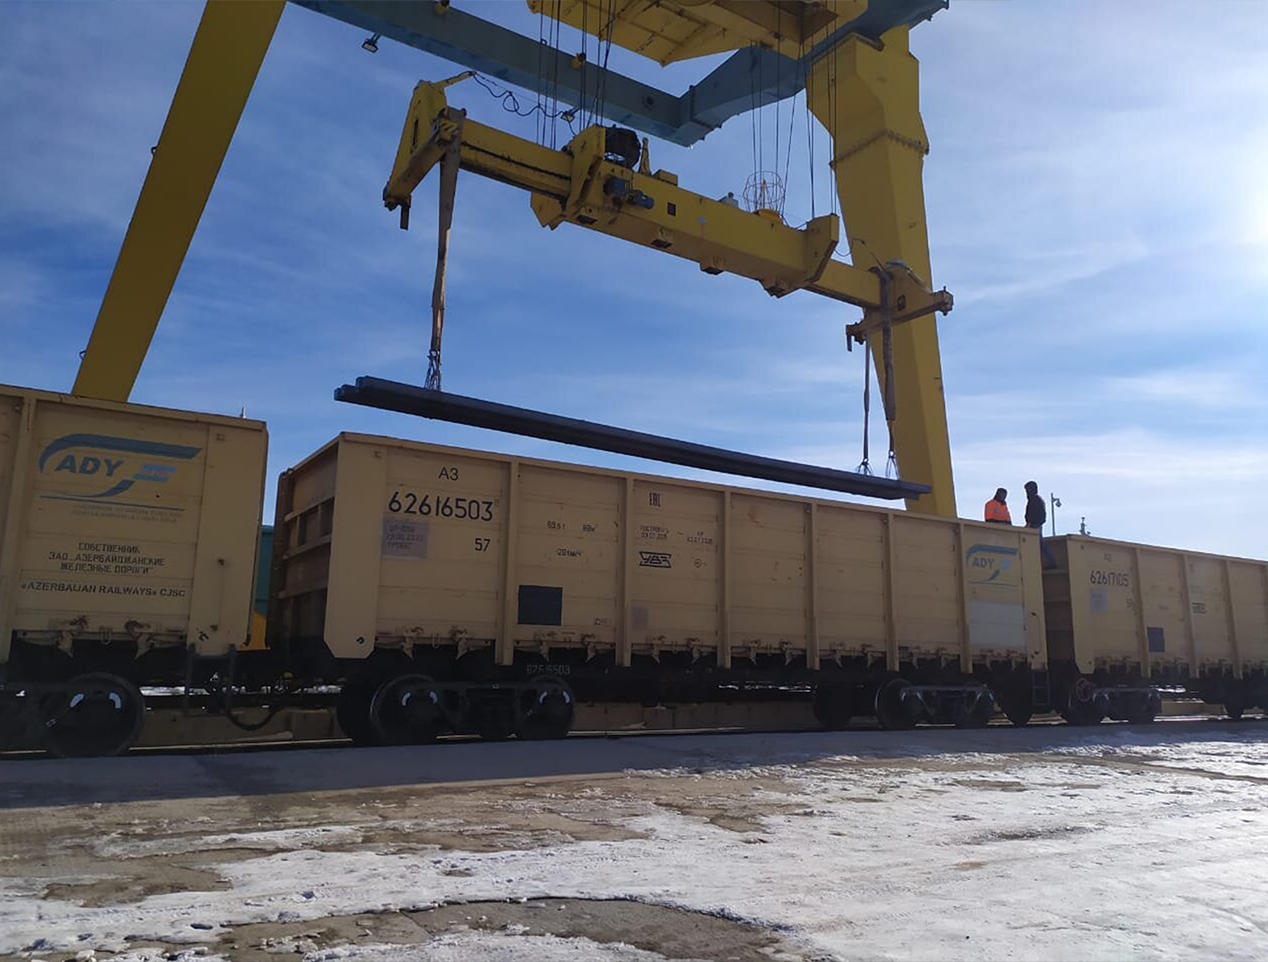 ADY Express starts export-oriented cargo transportation via BTK